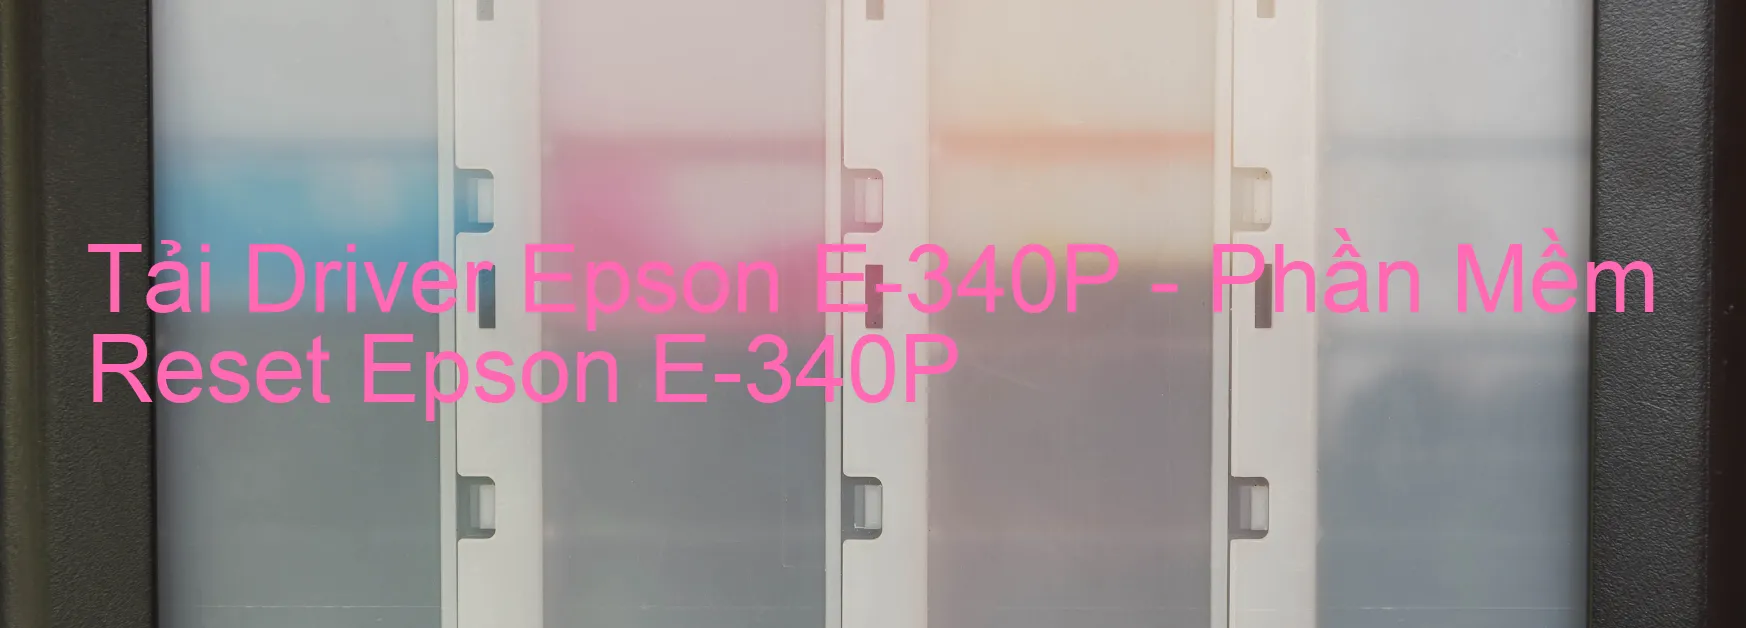 Driver Epson E-340P, Phần Mềm Reset Epson E-340P